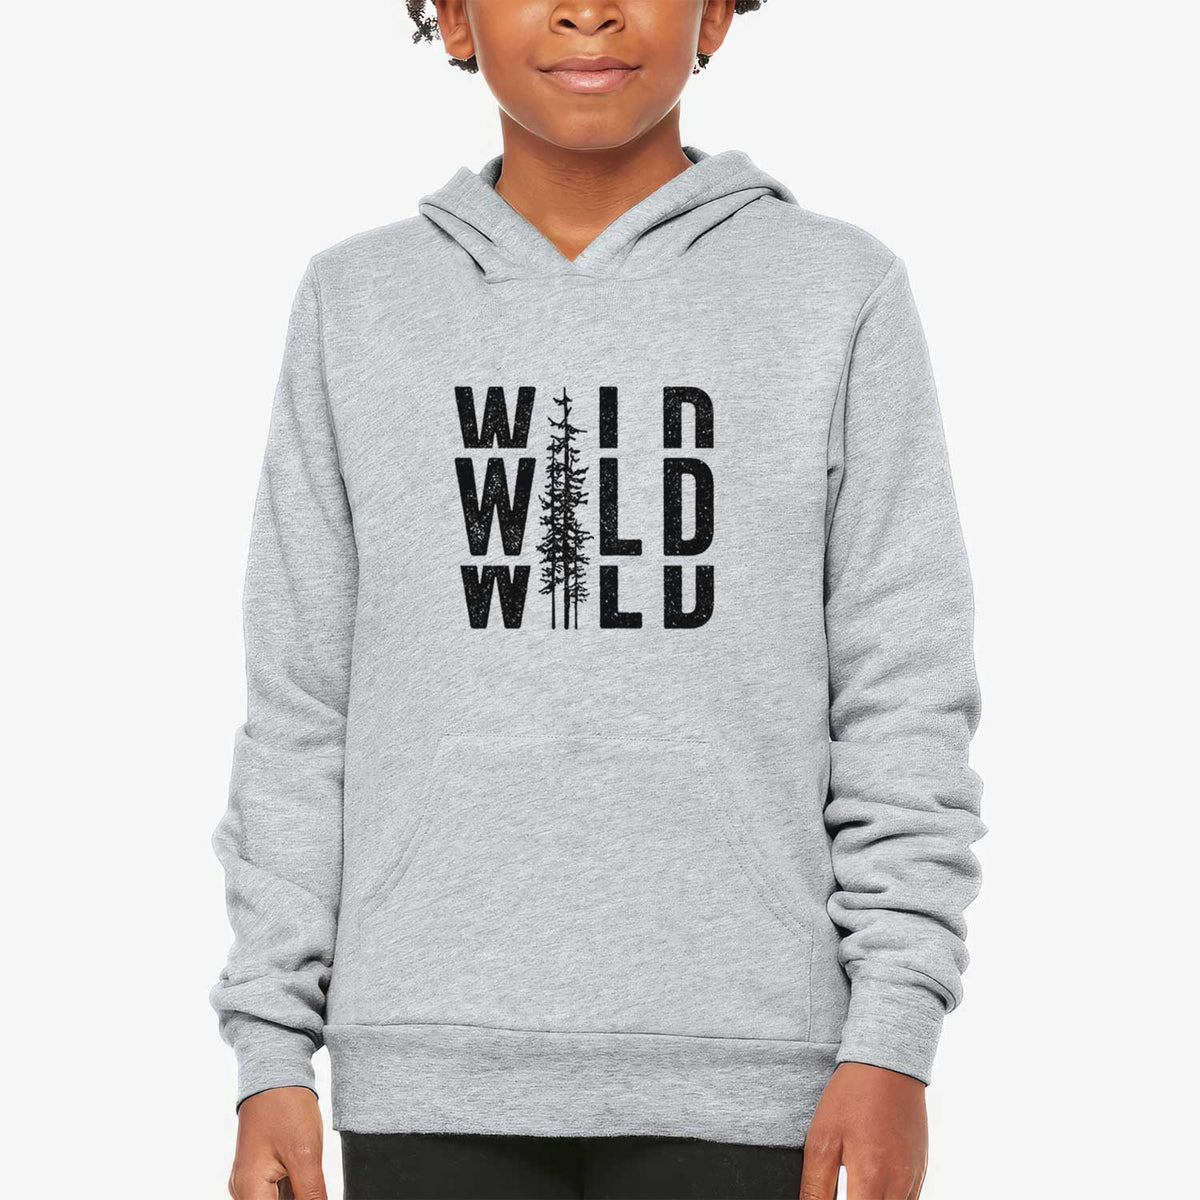 Wild - Youth Hoodie Sweatshirt